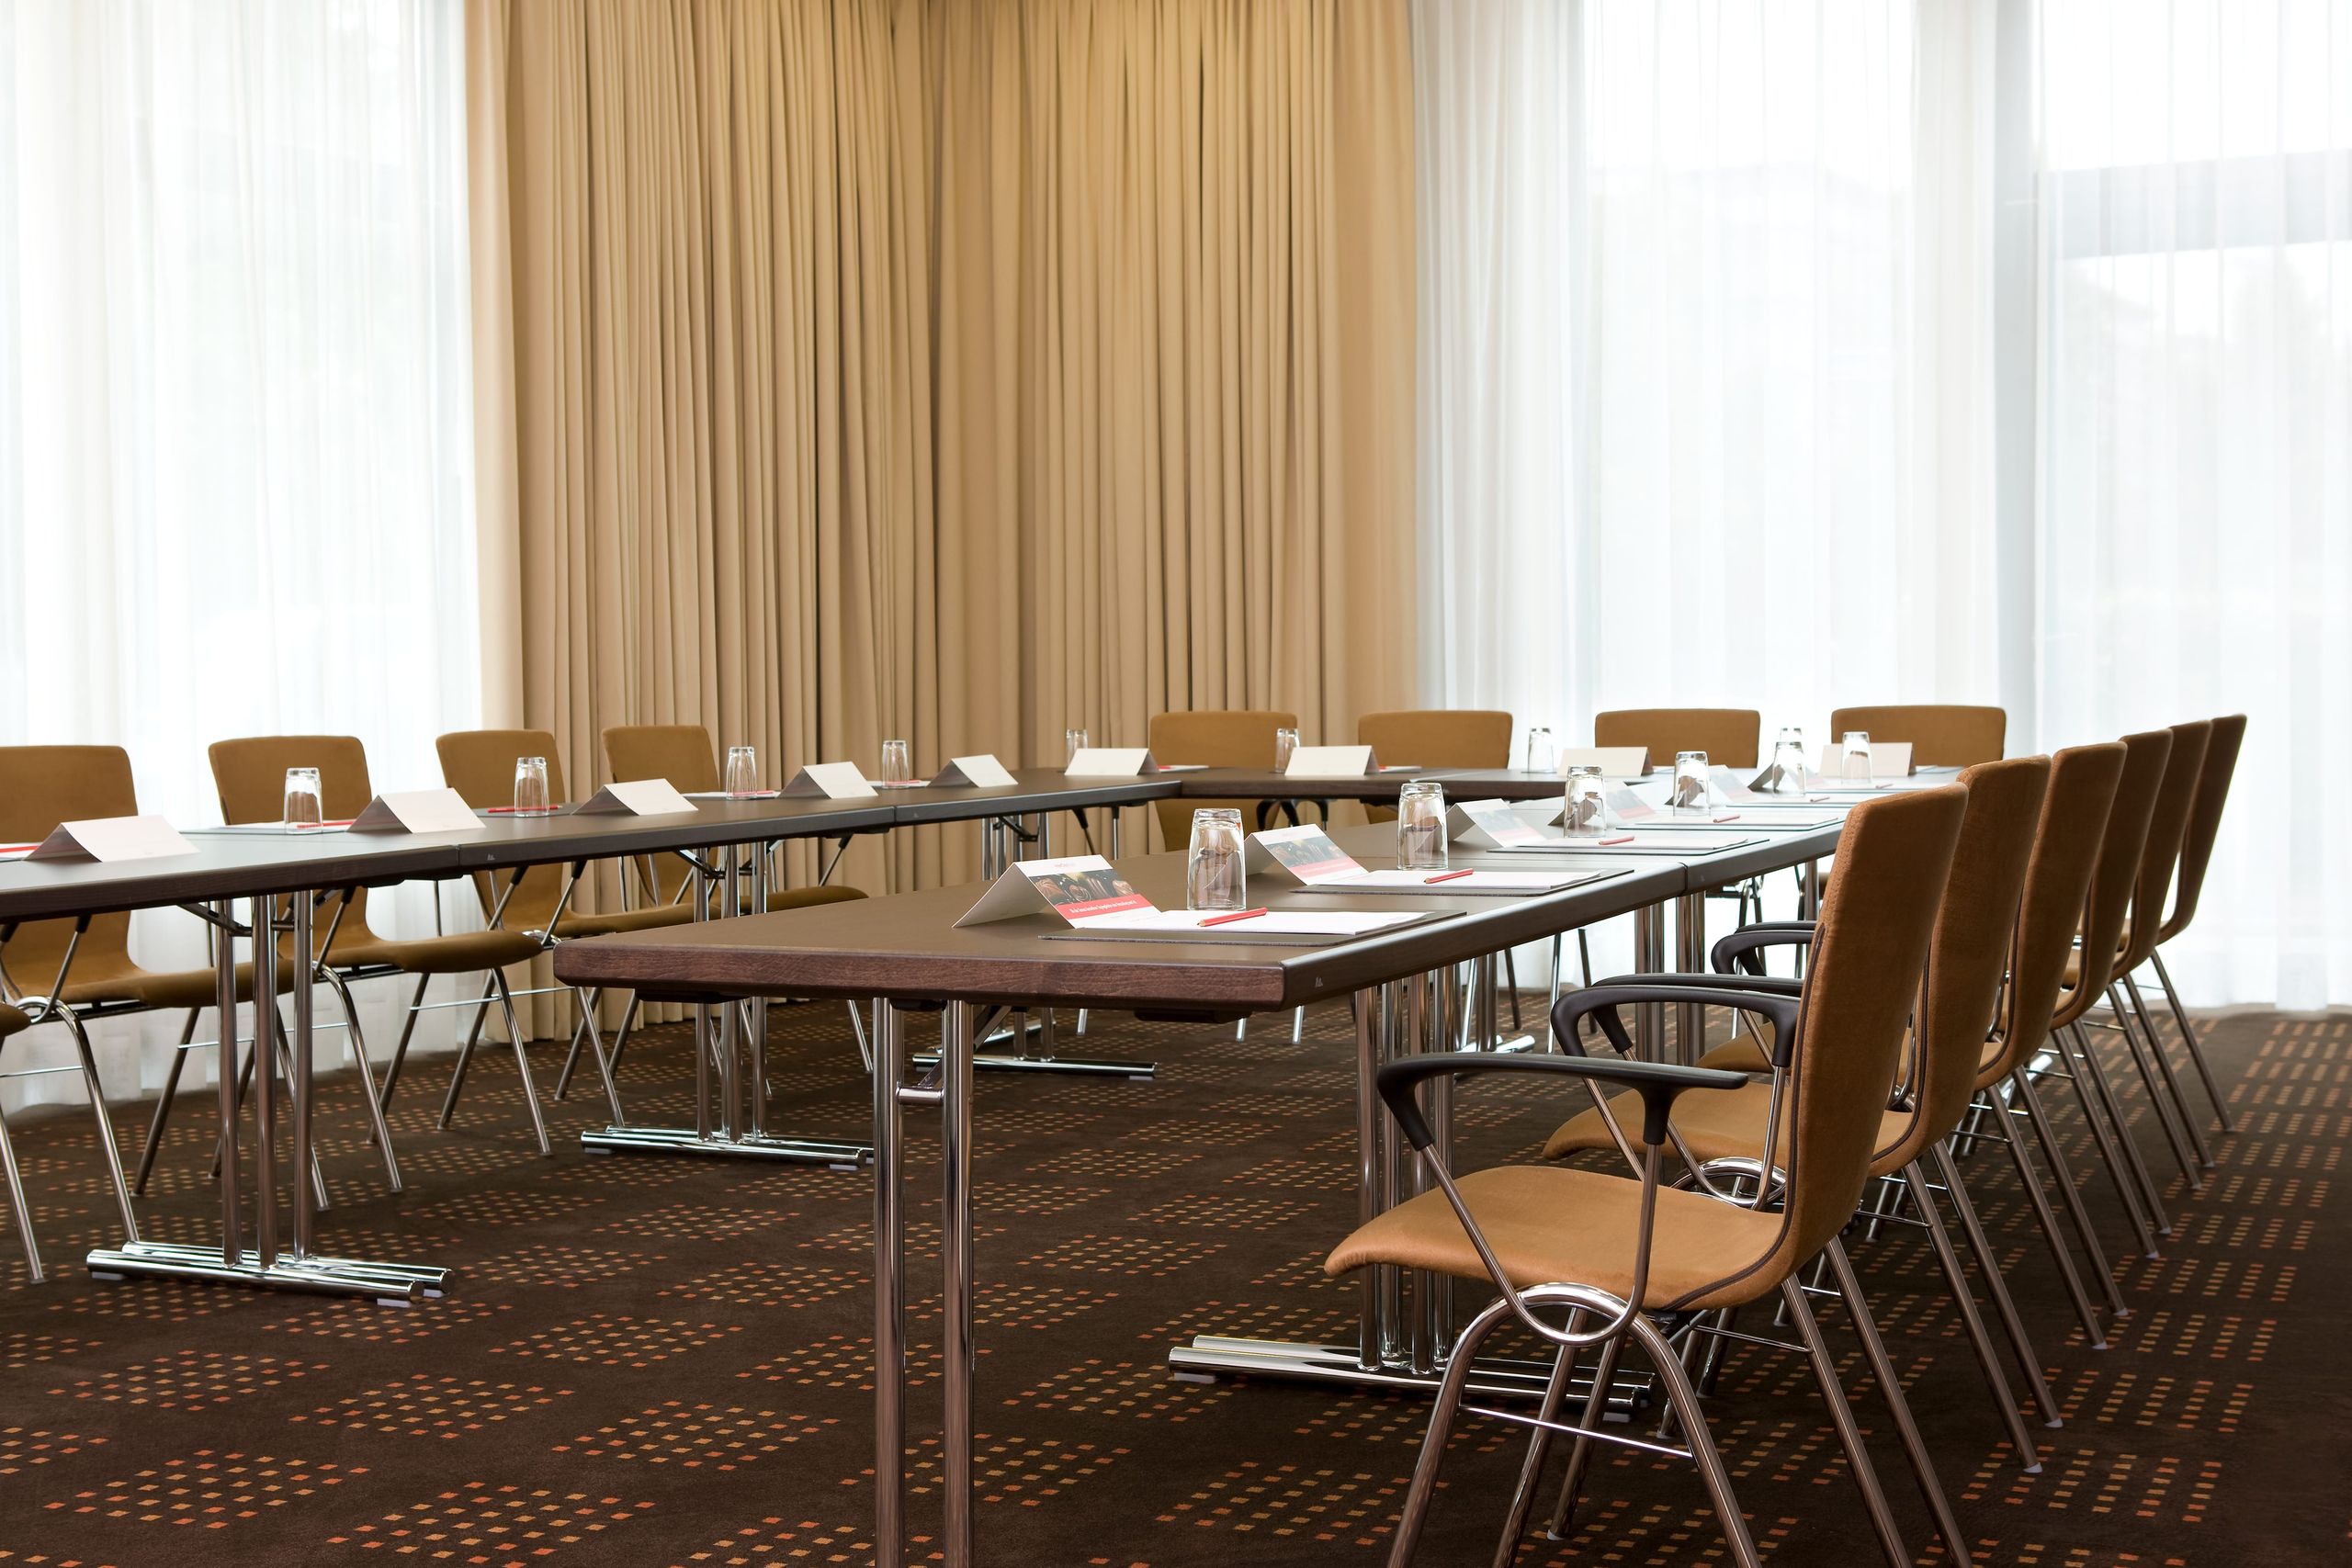 IntercityHotel Essen - reuniões & eventos